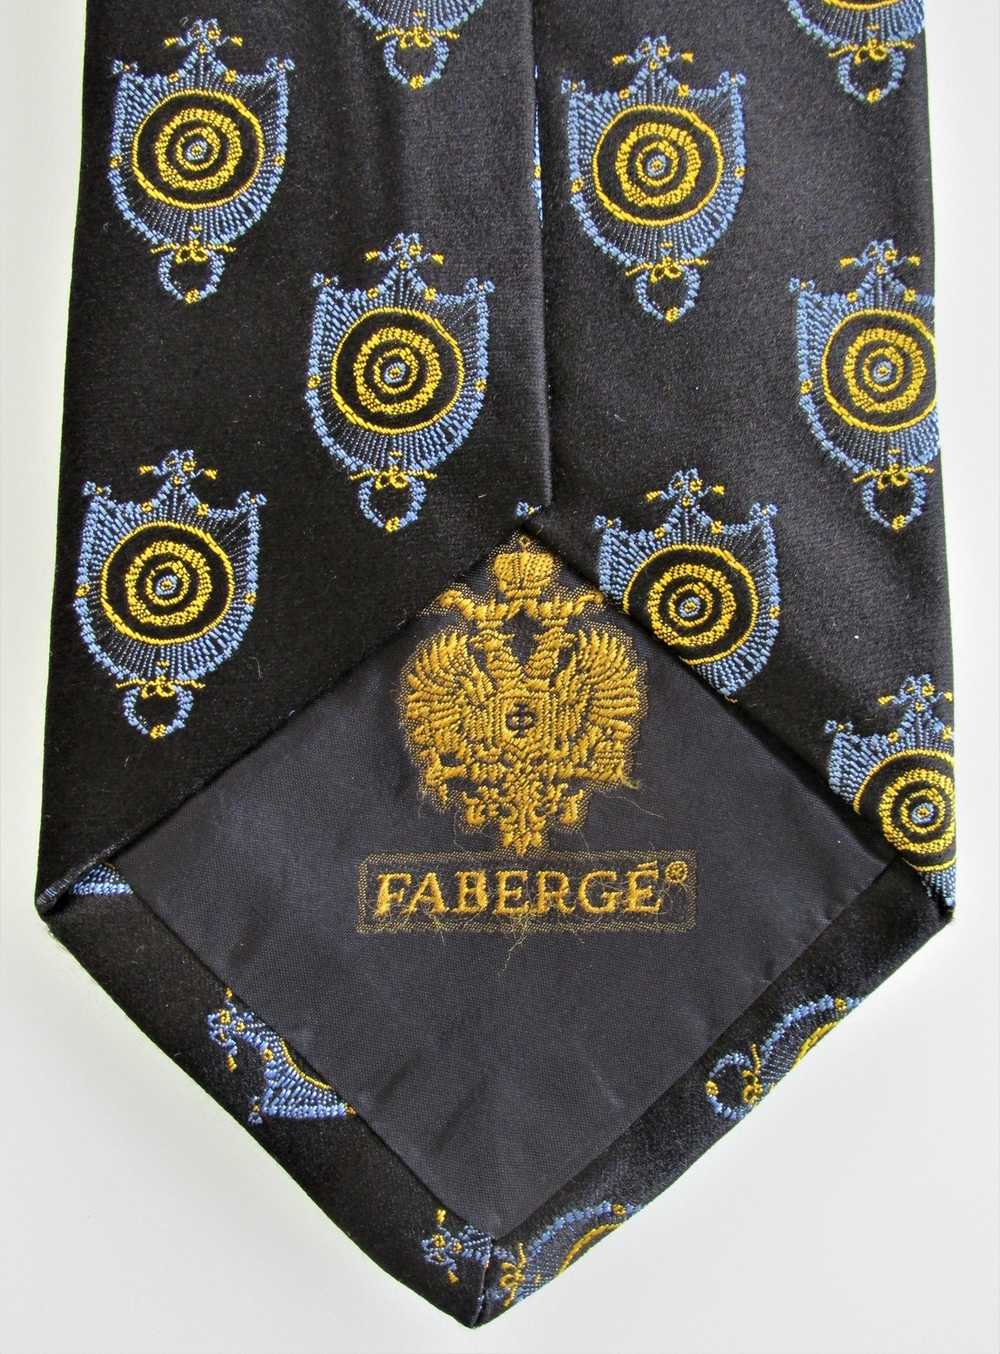 Other Faberge Men's Silk Tie Design #422 - image 4